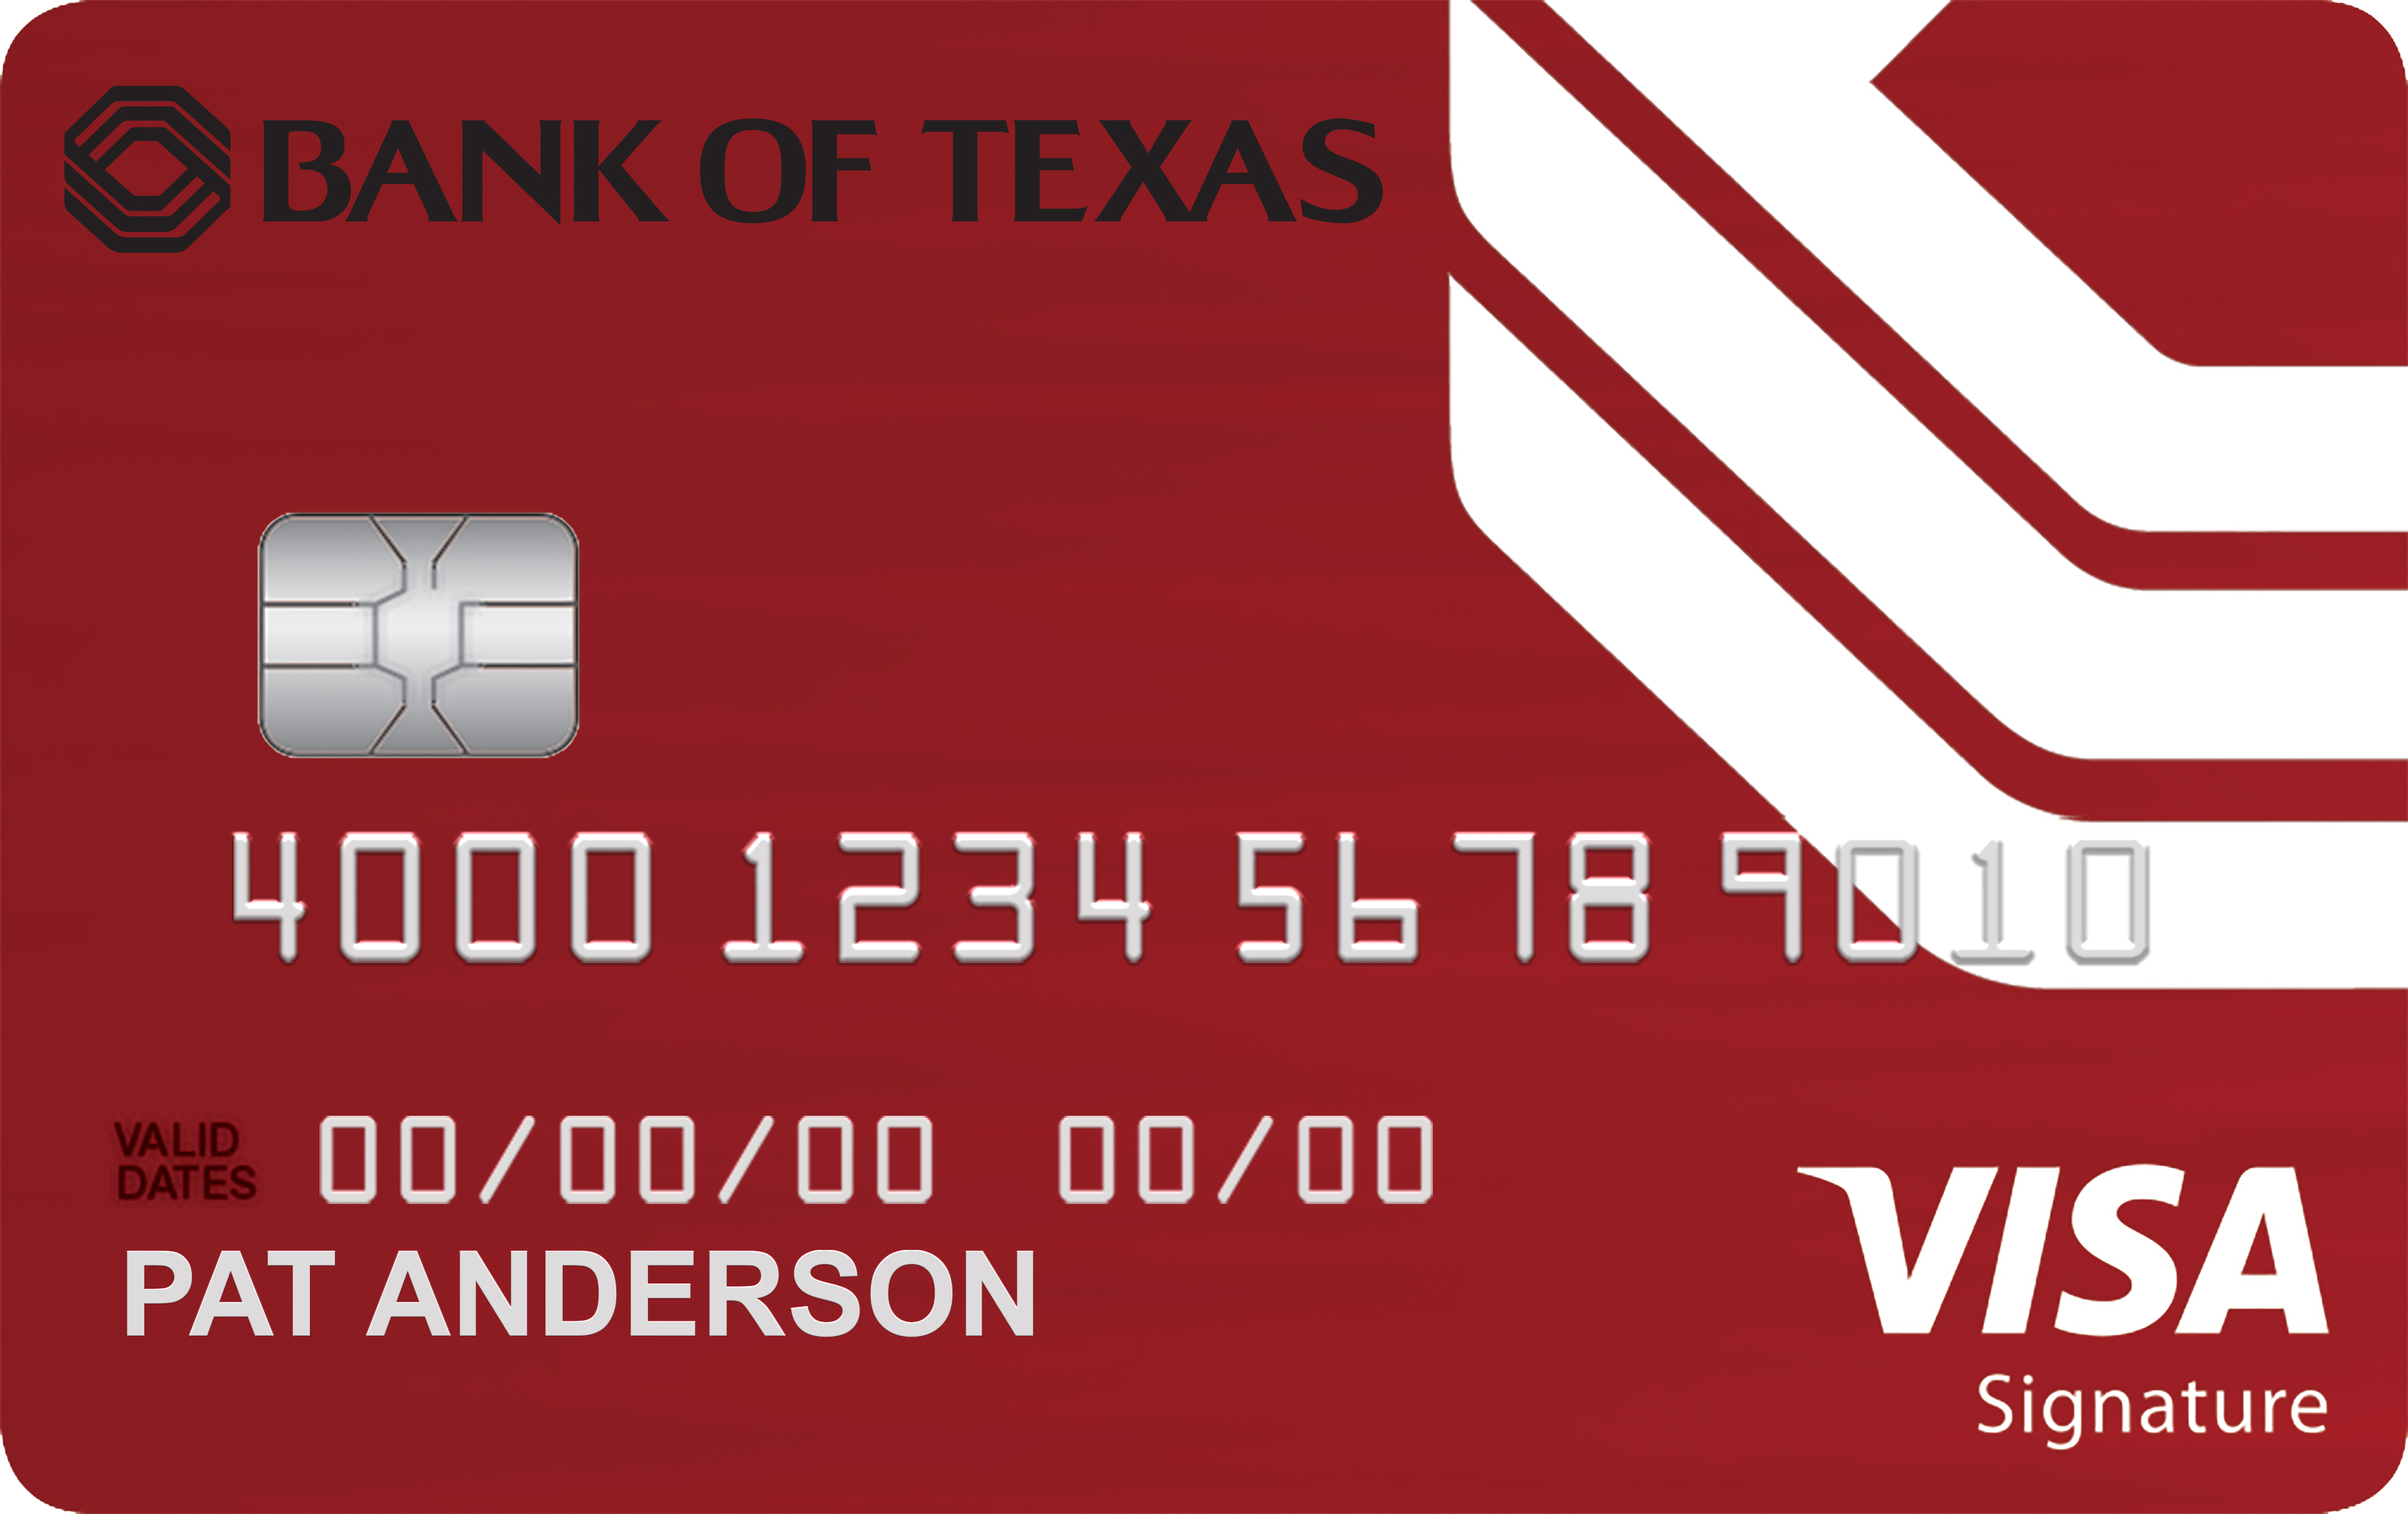 Bank of Texas Travel Rewards+ Card